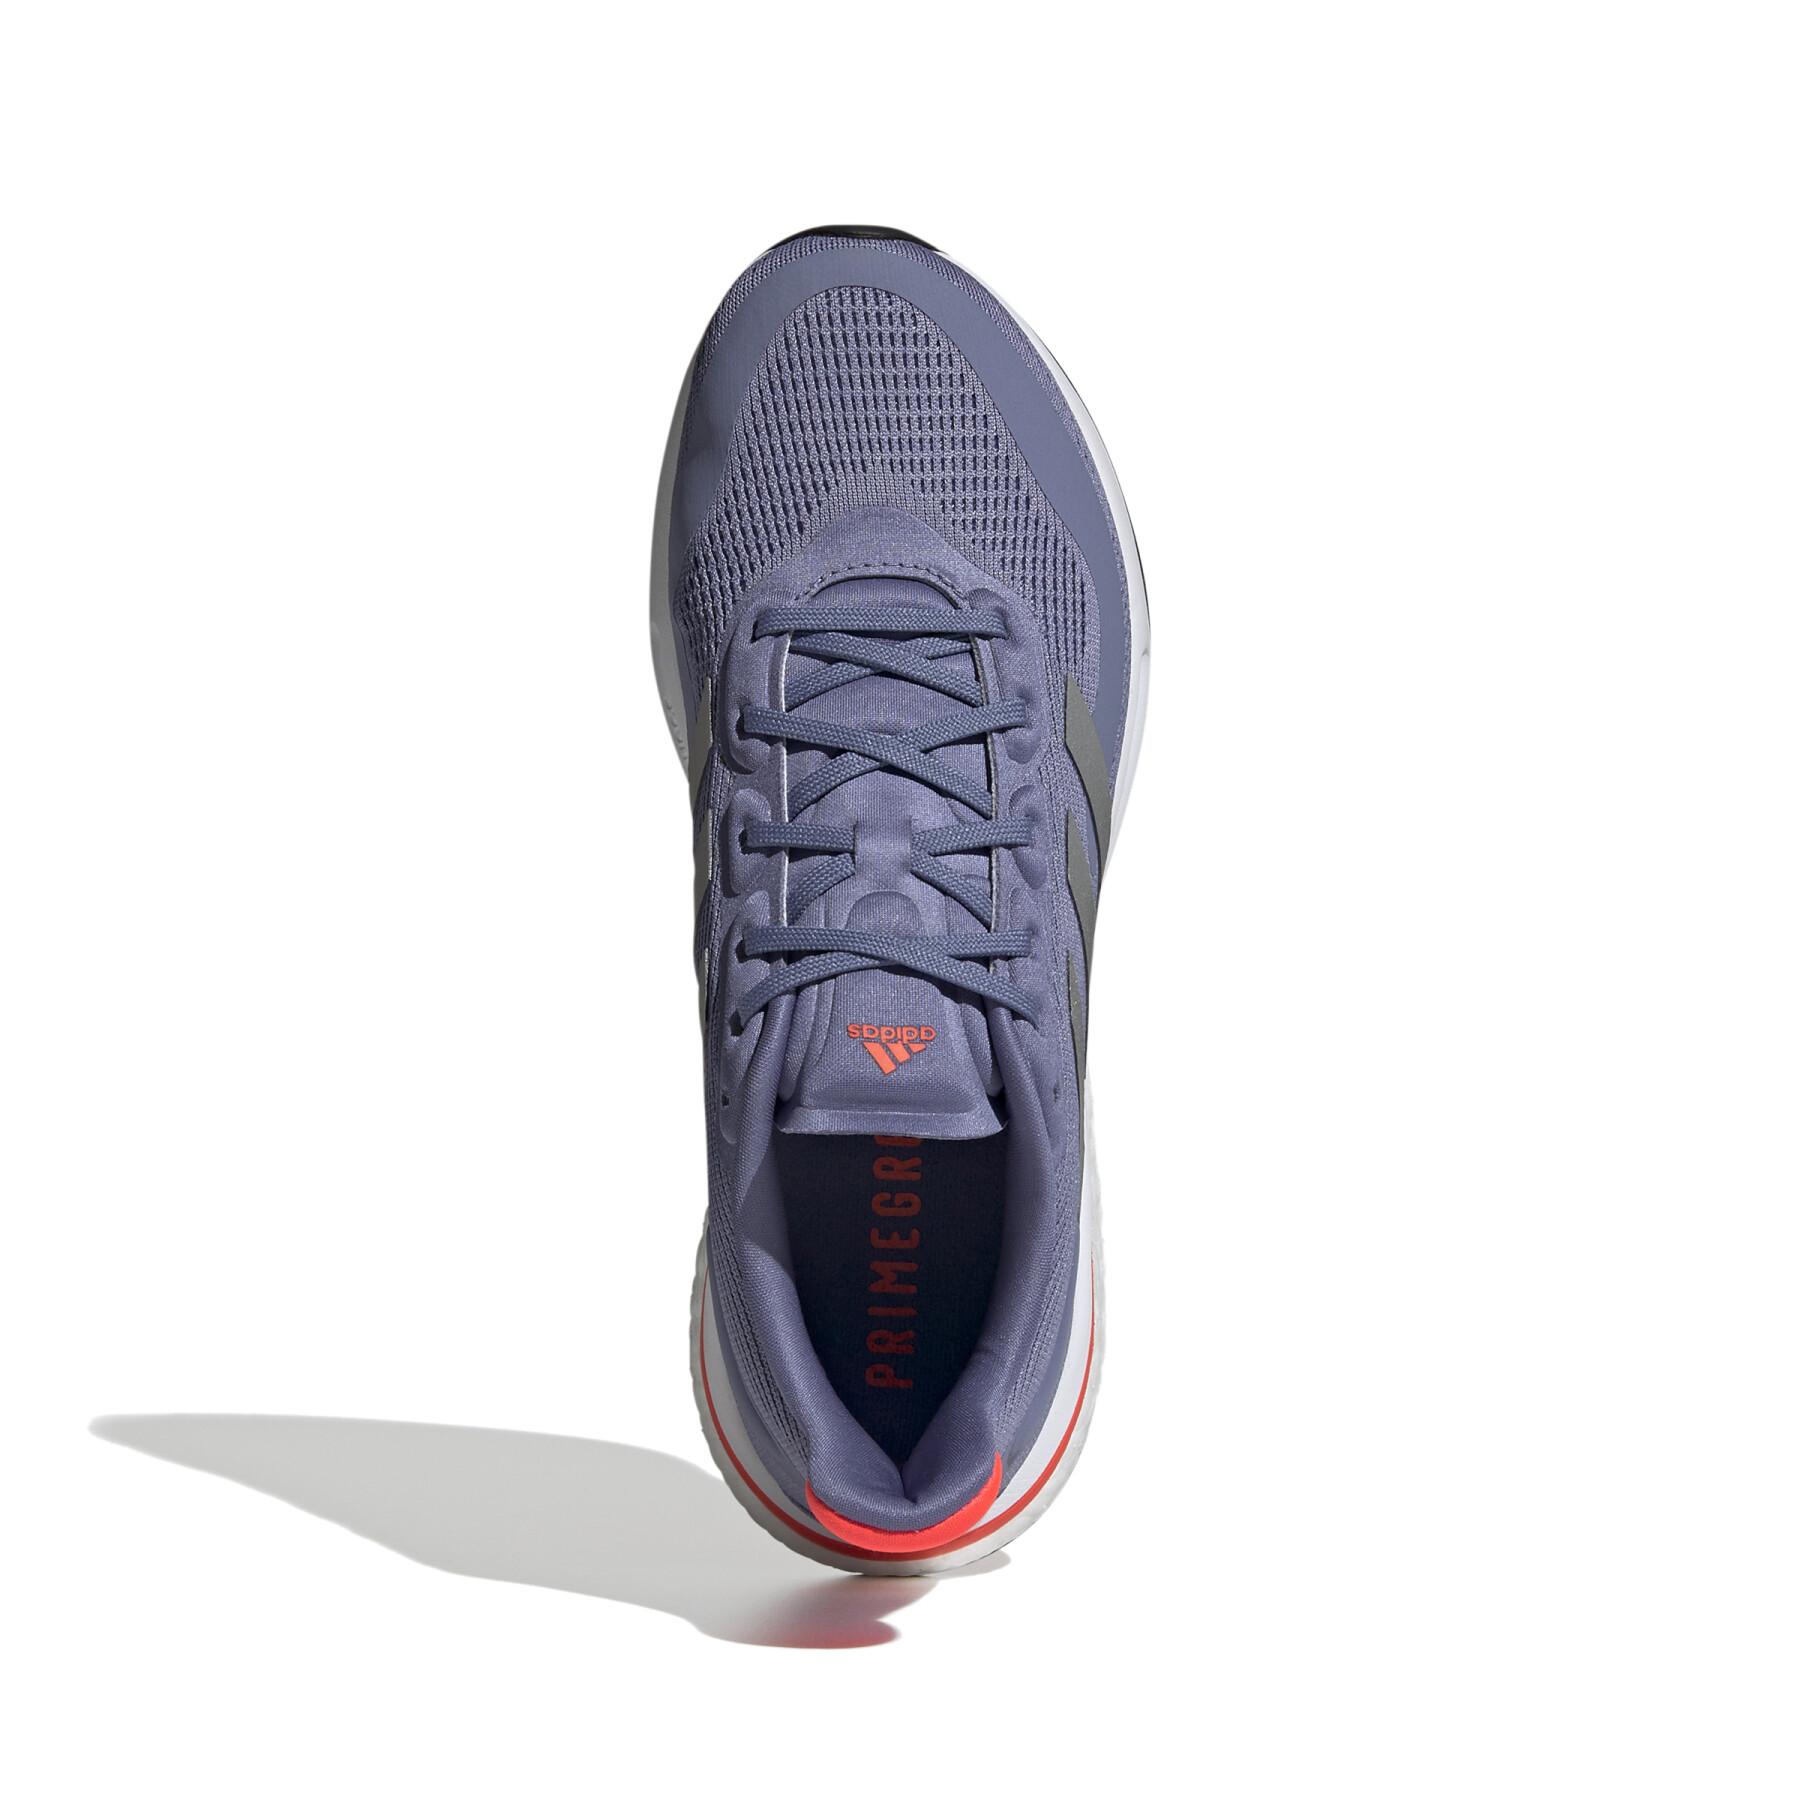 Buty do biegania dla kobiet adidas Supernova